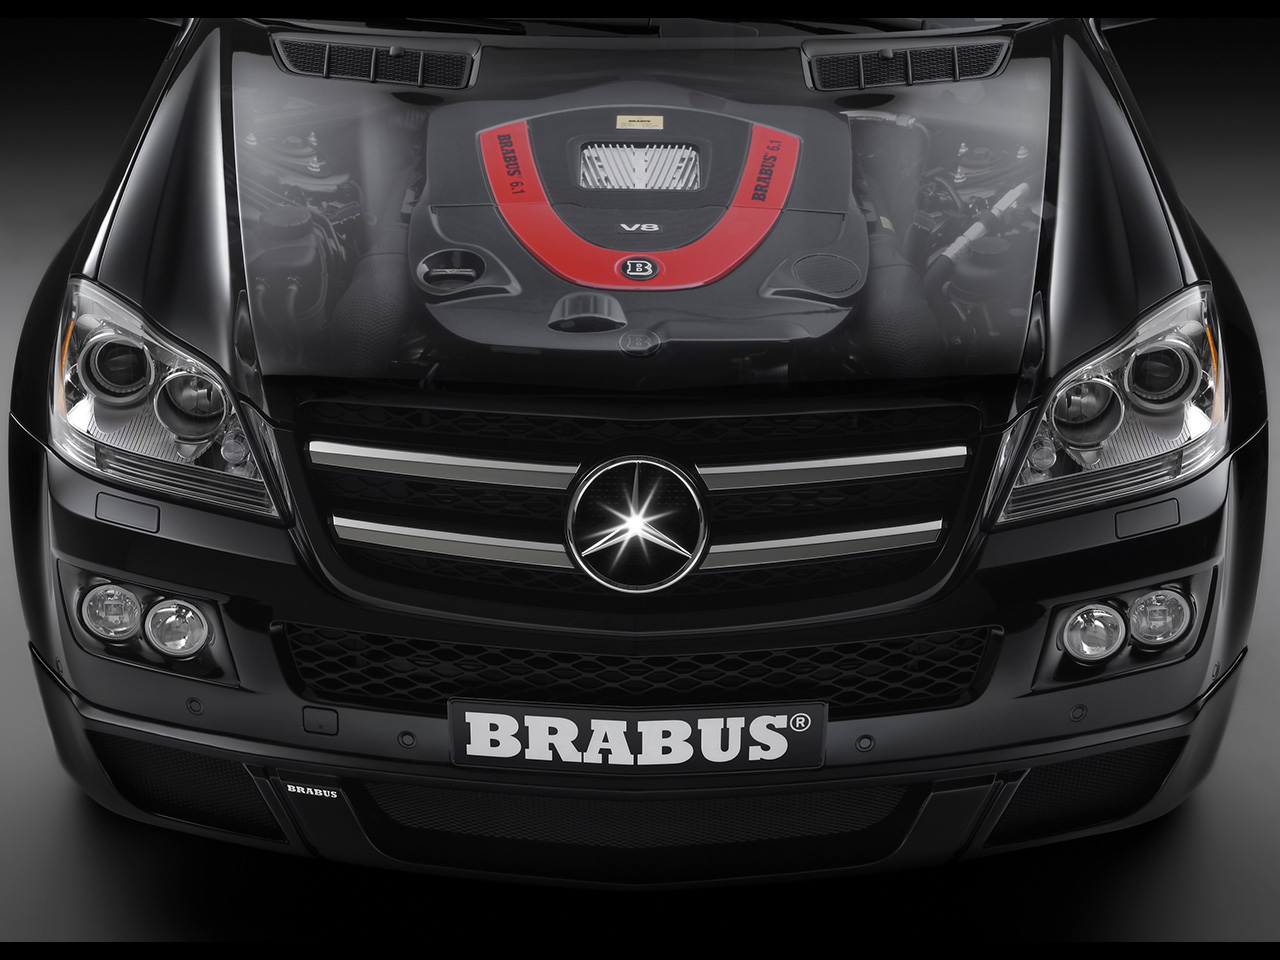 2007 Brabus Mercedes-Benz GL Class